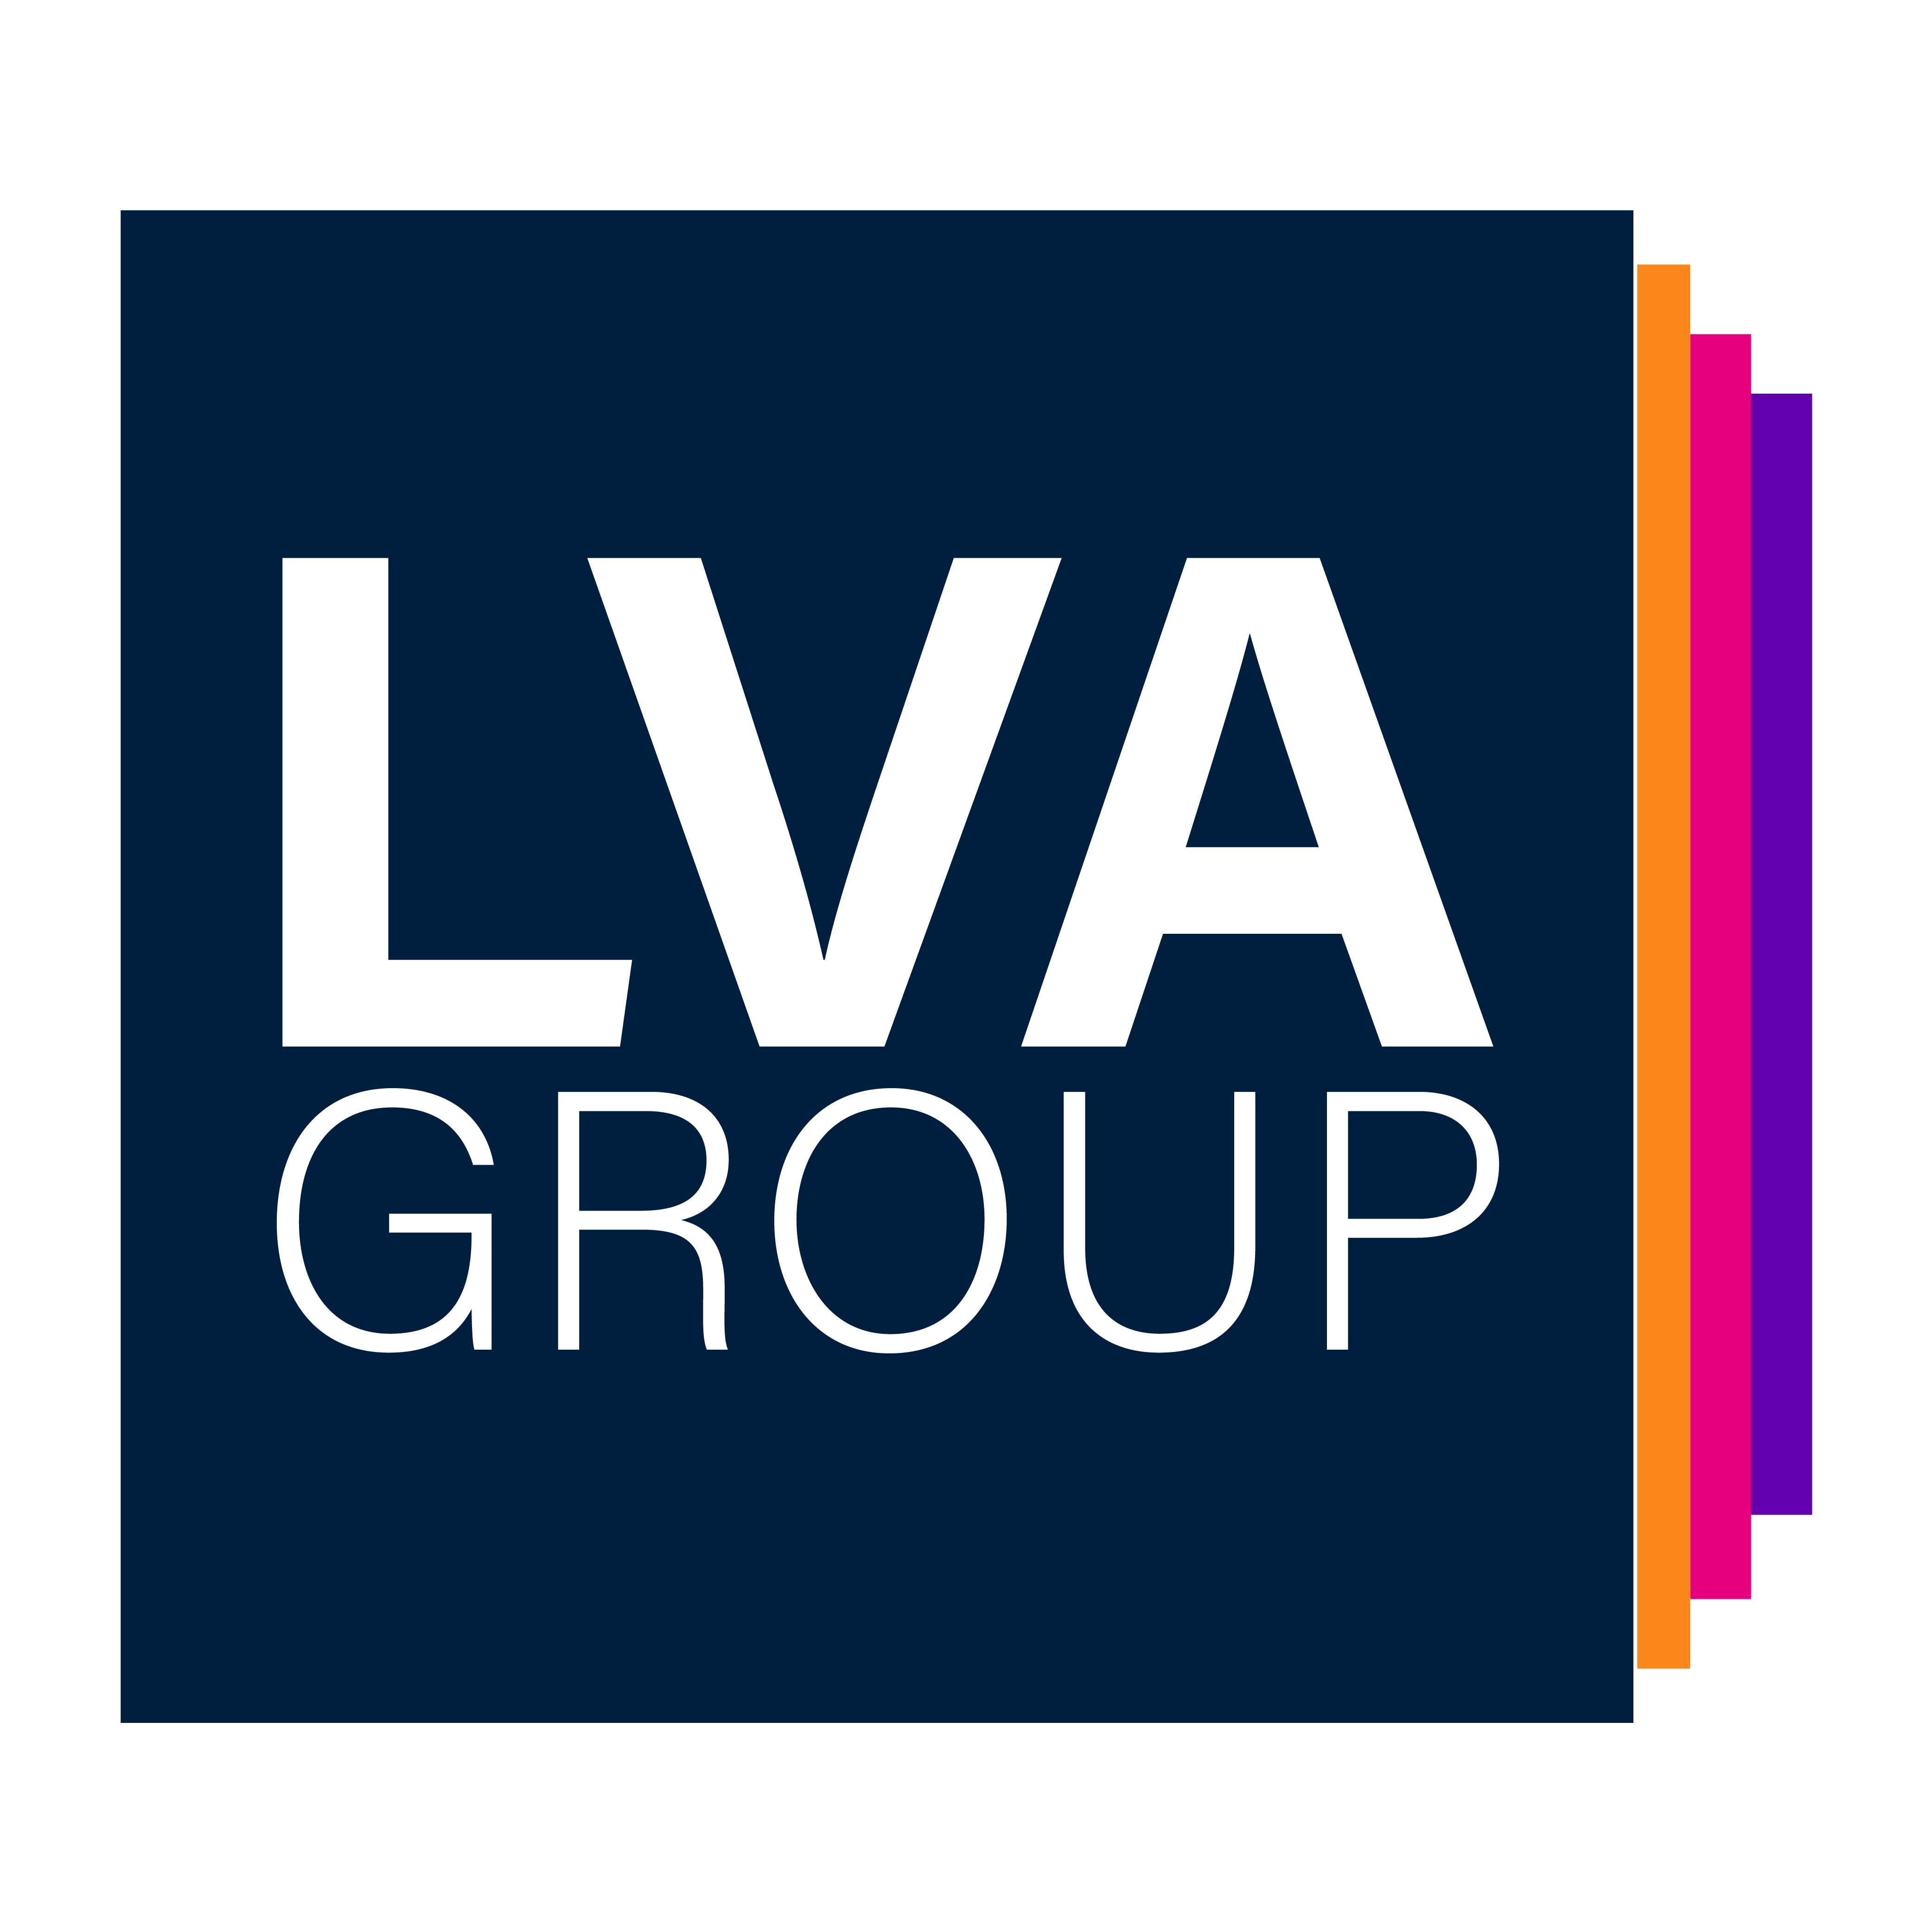 LVA Group